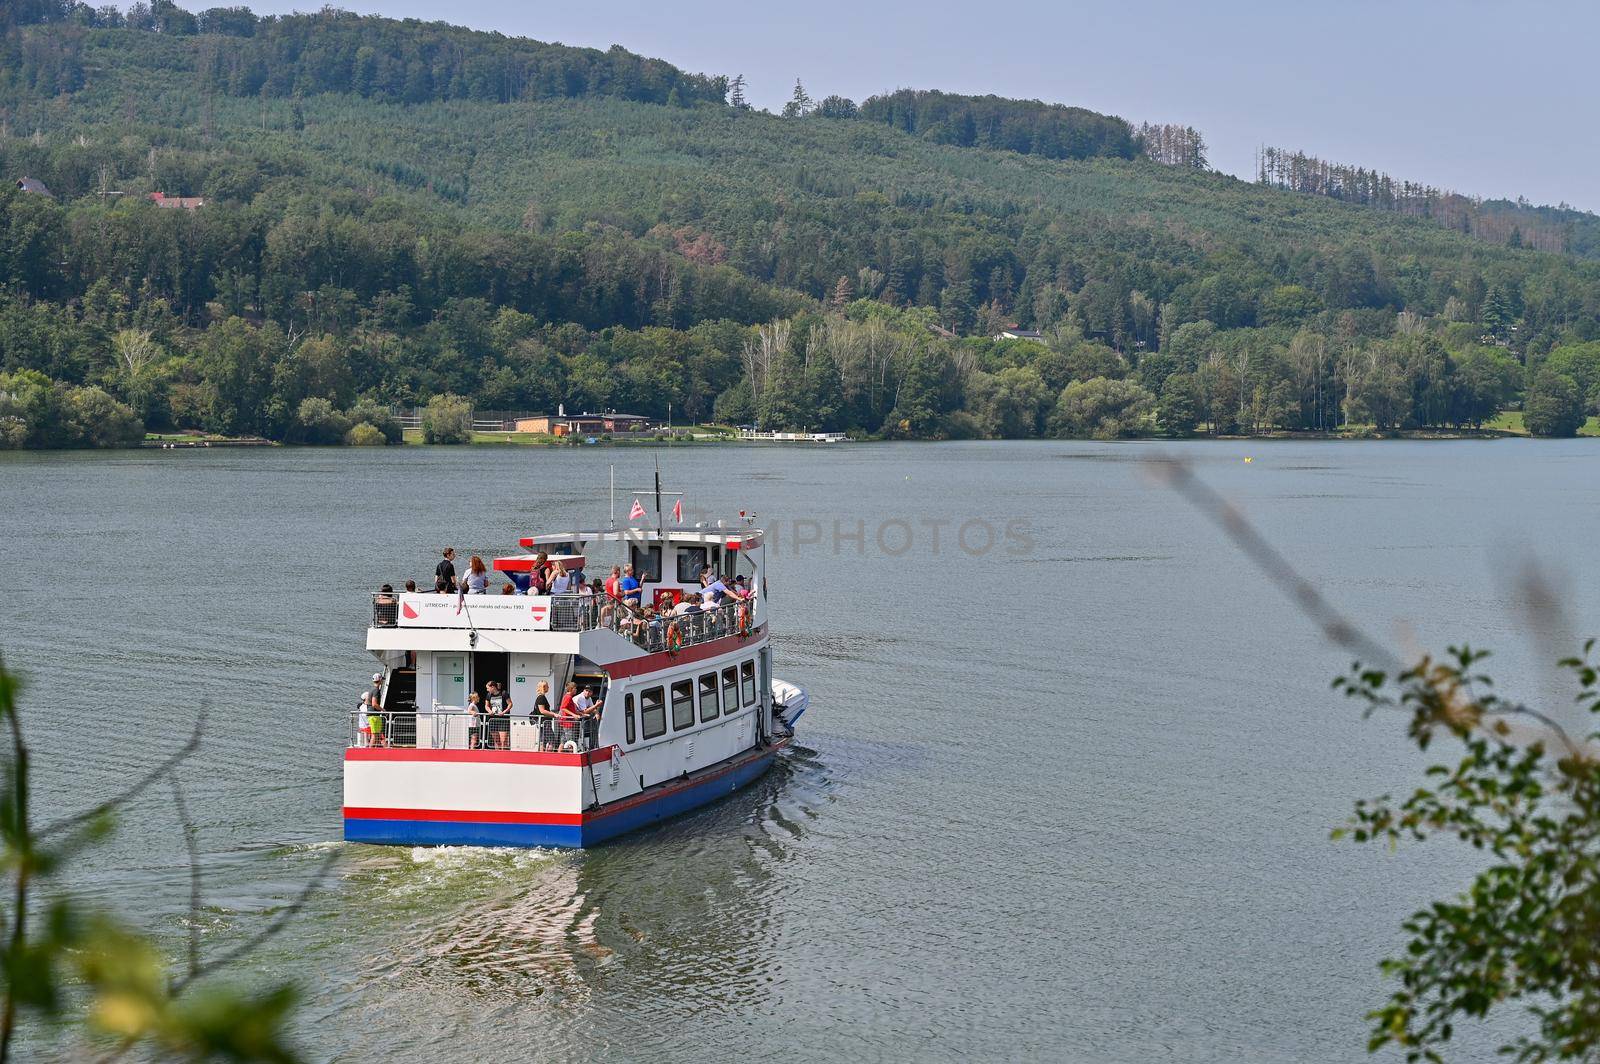 Brno, Czech Republic - Europe. August 24, 2019.
Cruise ship / steamer on the Brno dam.